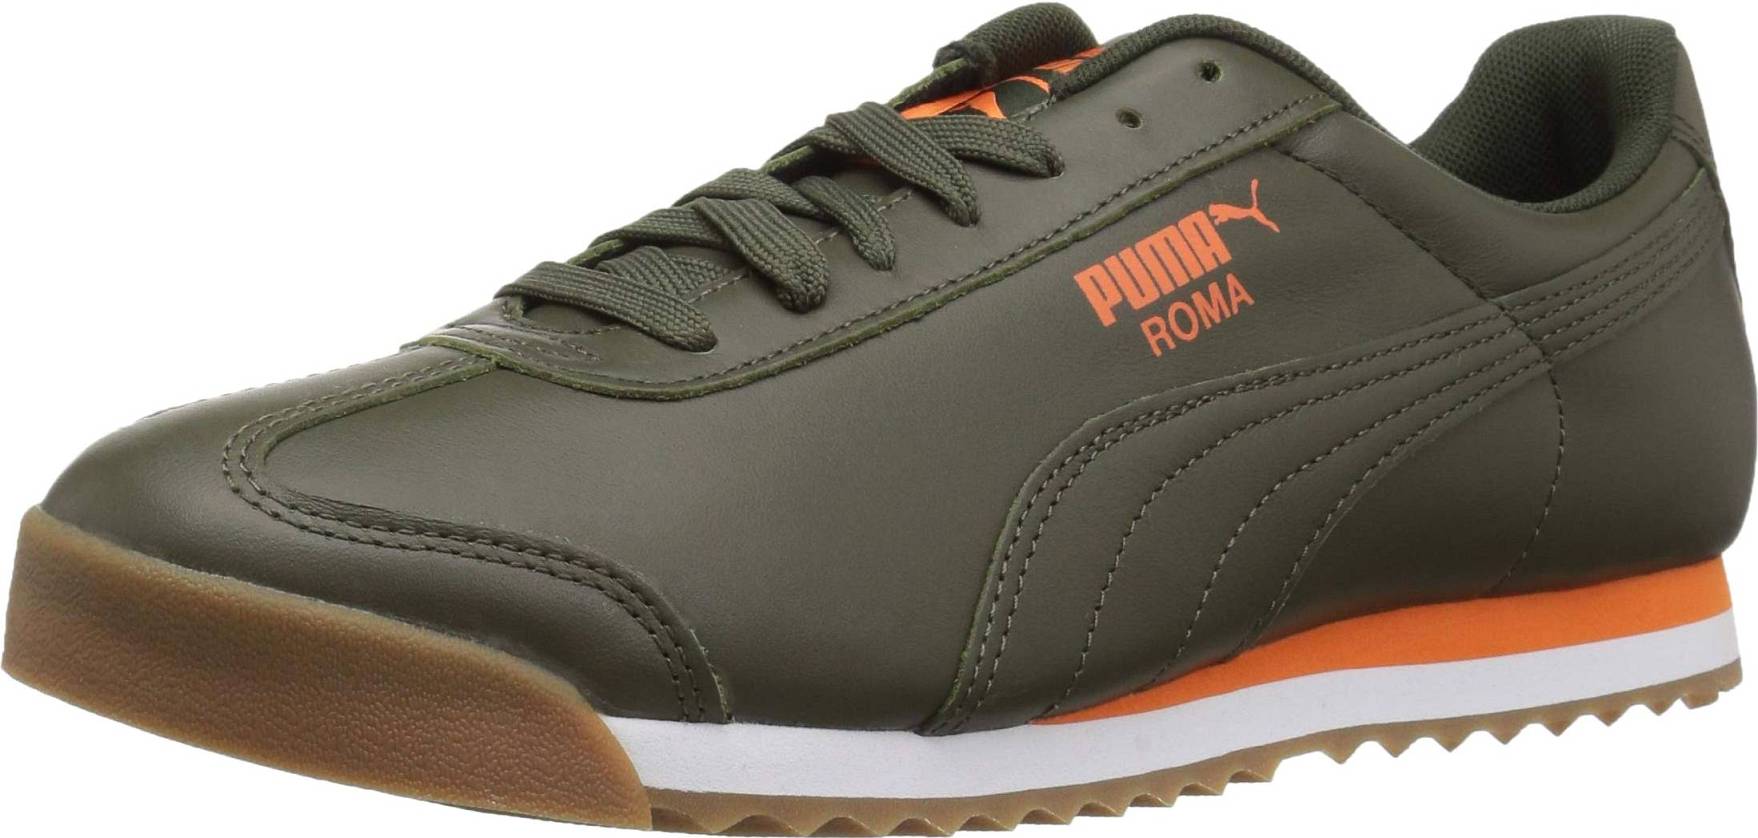 Puma Roma Classic Gum – Shoes Reviews & Reasons To Buy